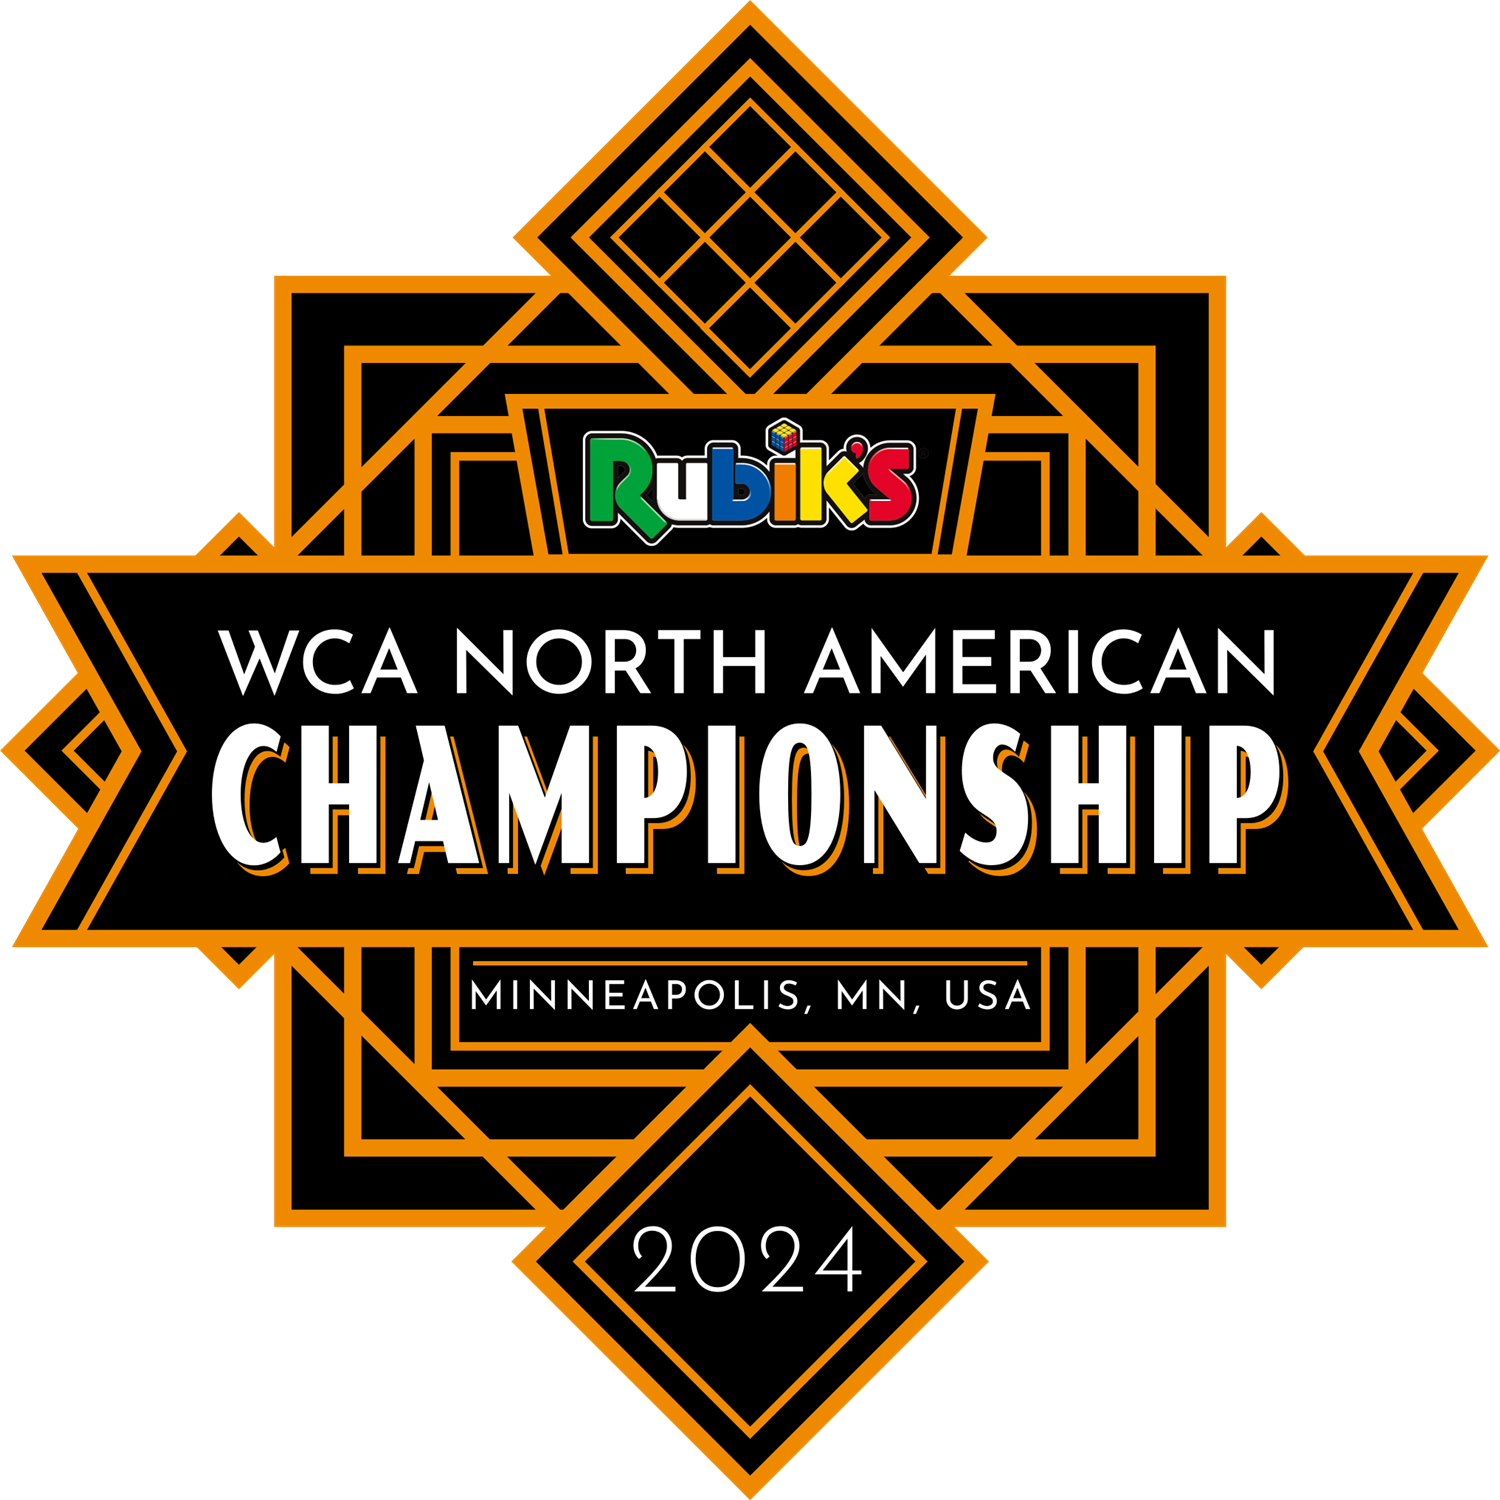 Rubik's WCA North American Championship 2024 Spectator Tickets